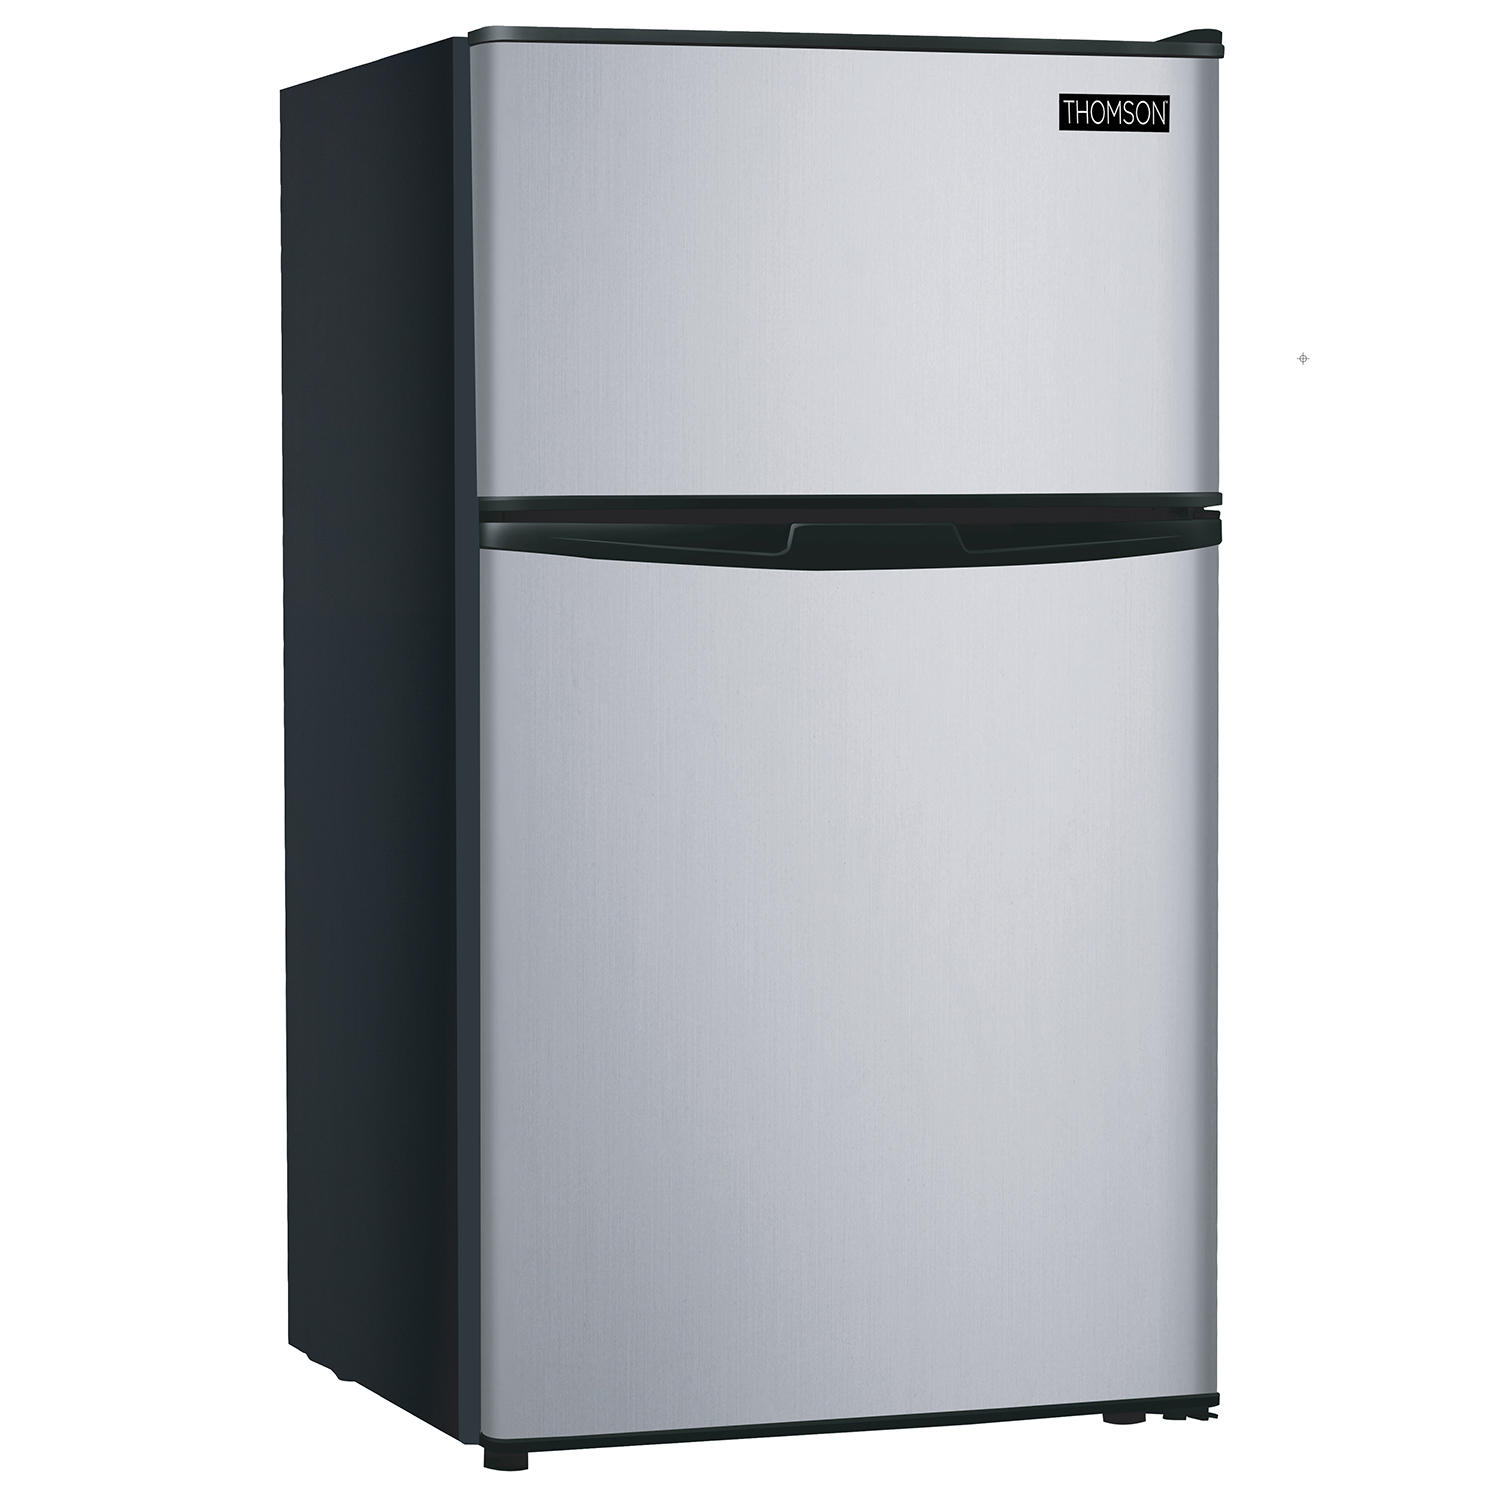 Thomson 3.2 cu. ft. Mini Refrigerator